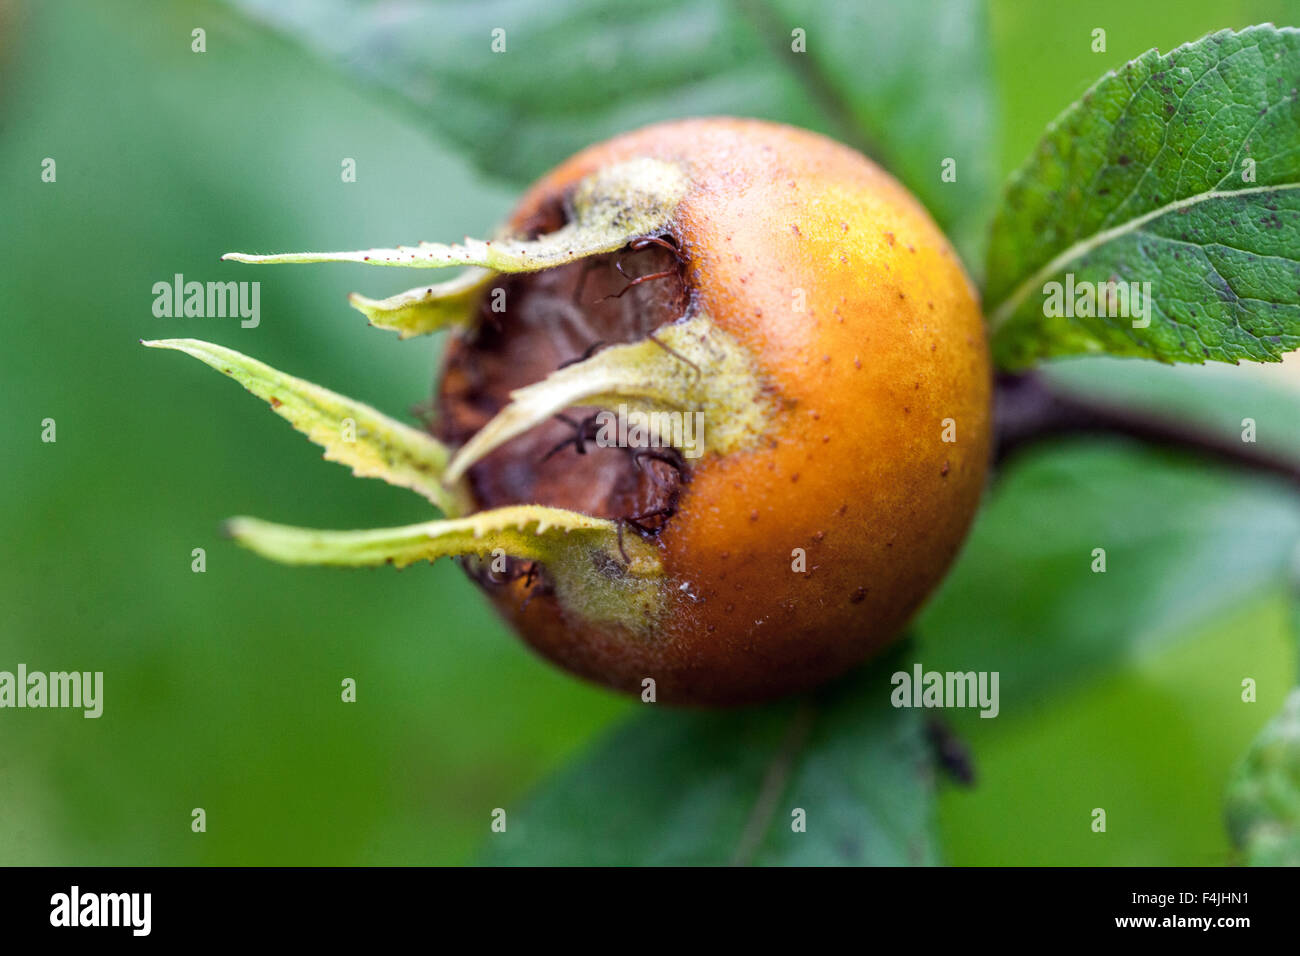 Mespilus germanica fruit, medlar or common medlar Stock Photo